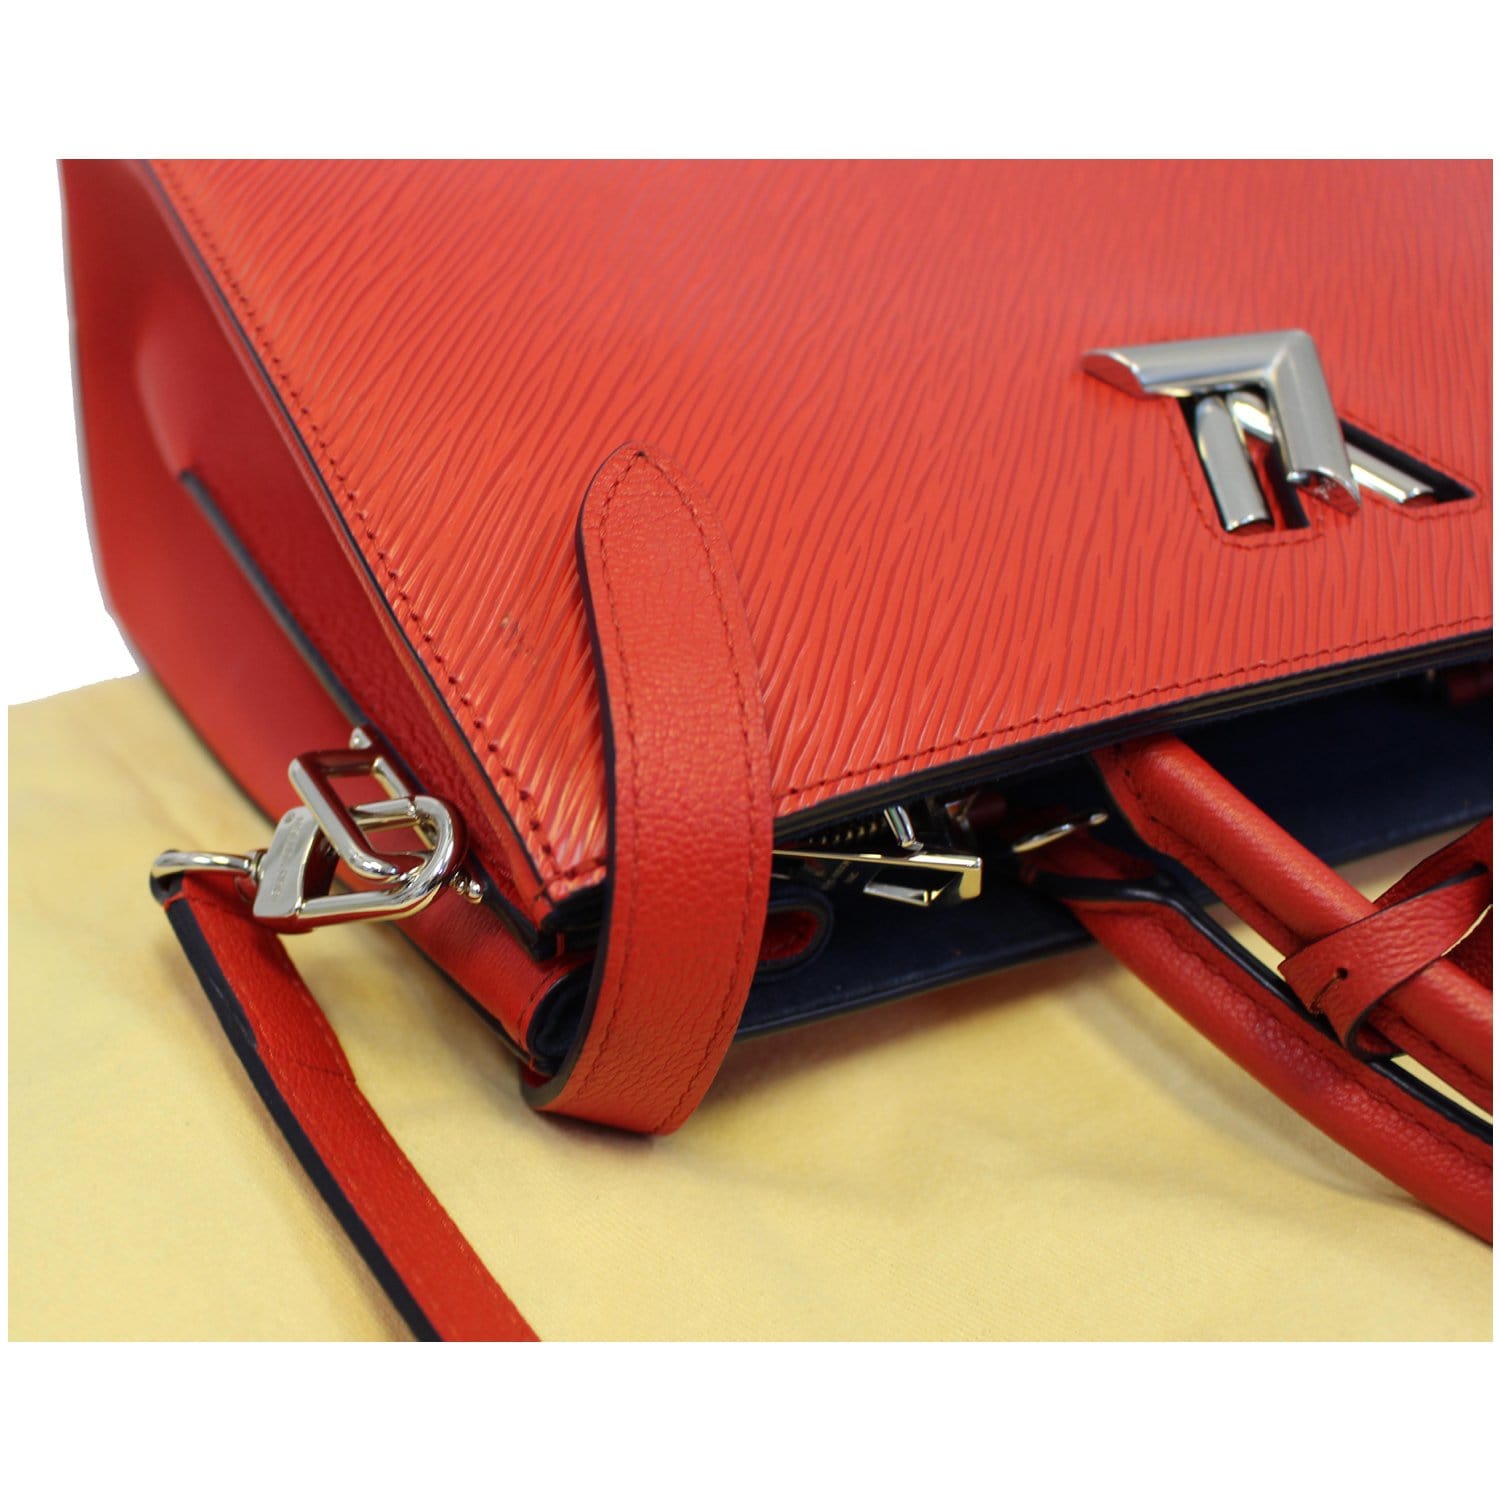 Louis Vuitton Twist Tote Bag